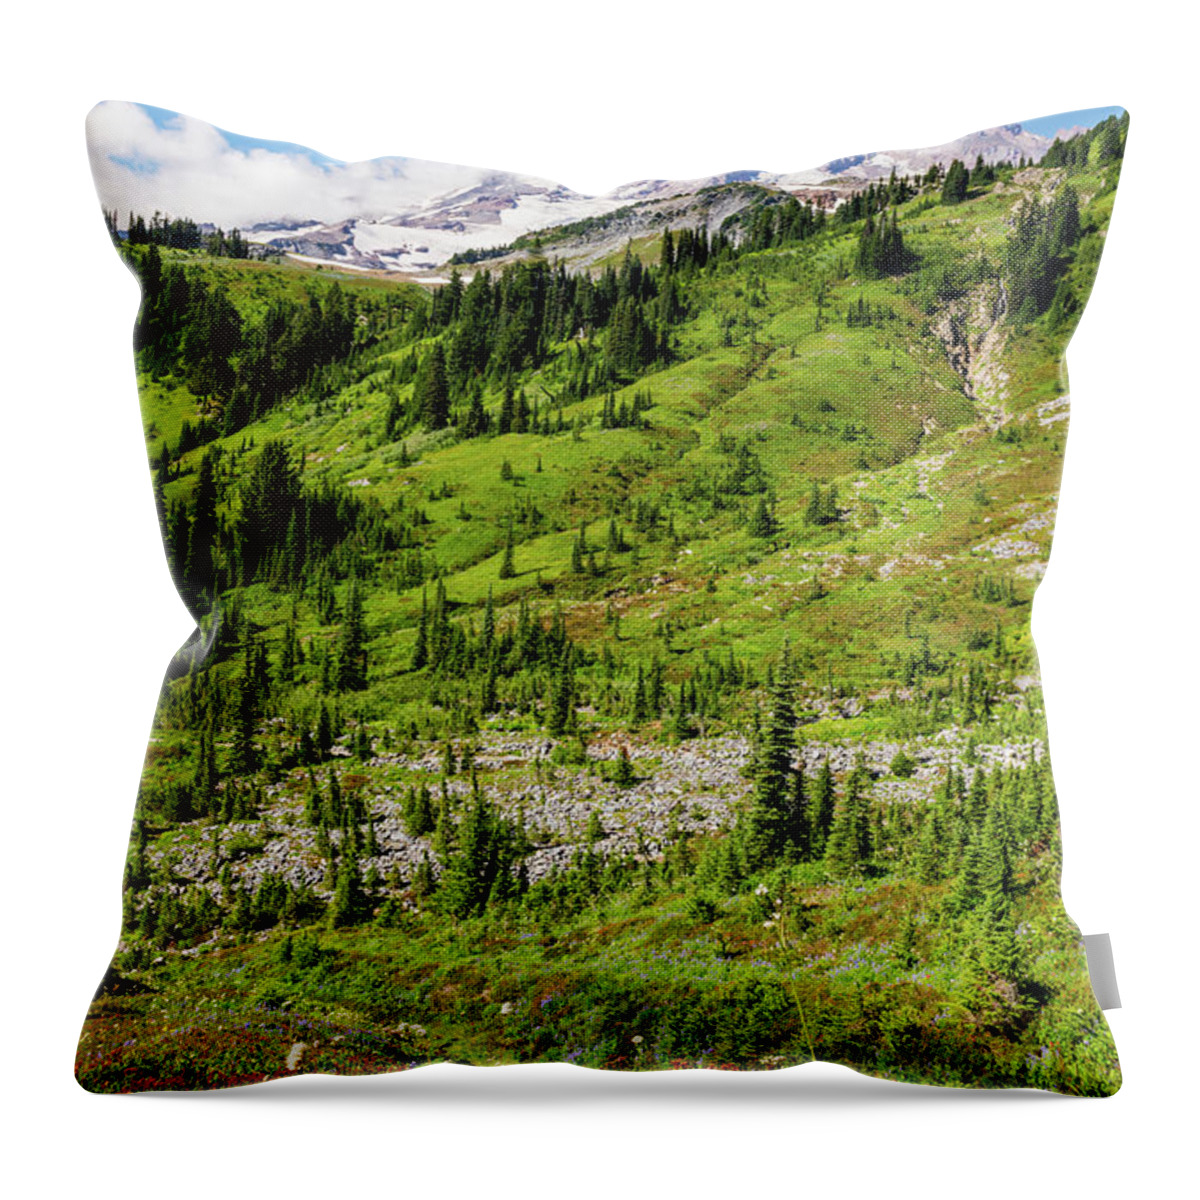 Outdoor; Skyline Trail; Summer; Mt Rainier; Mountains; Flowers; Throw Pillow featuring the digital art Late Summer Mt Rainier by Michael Lee